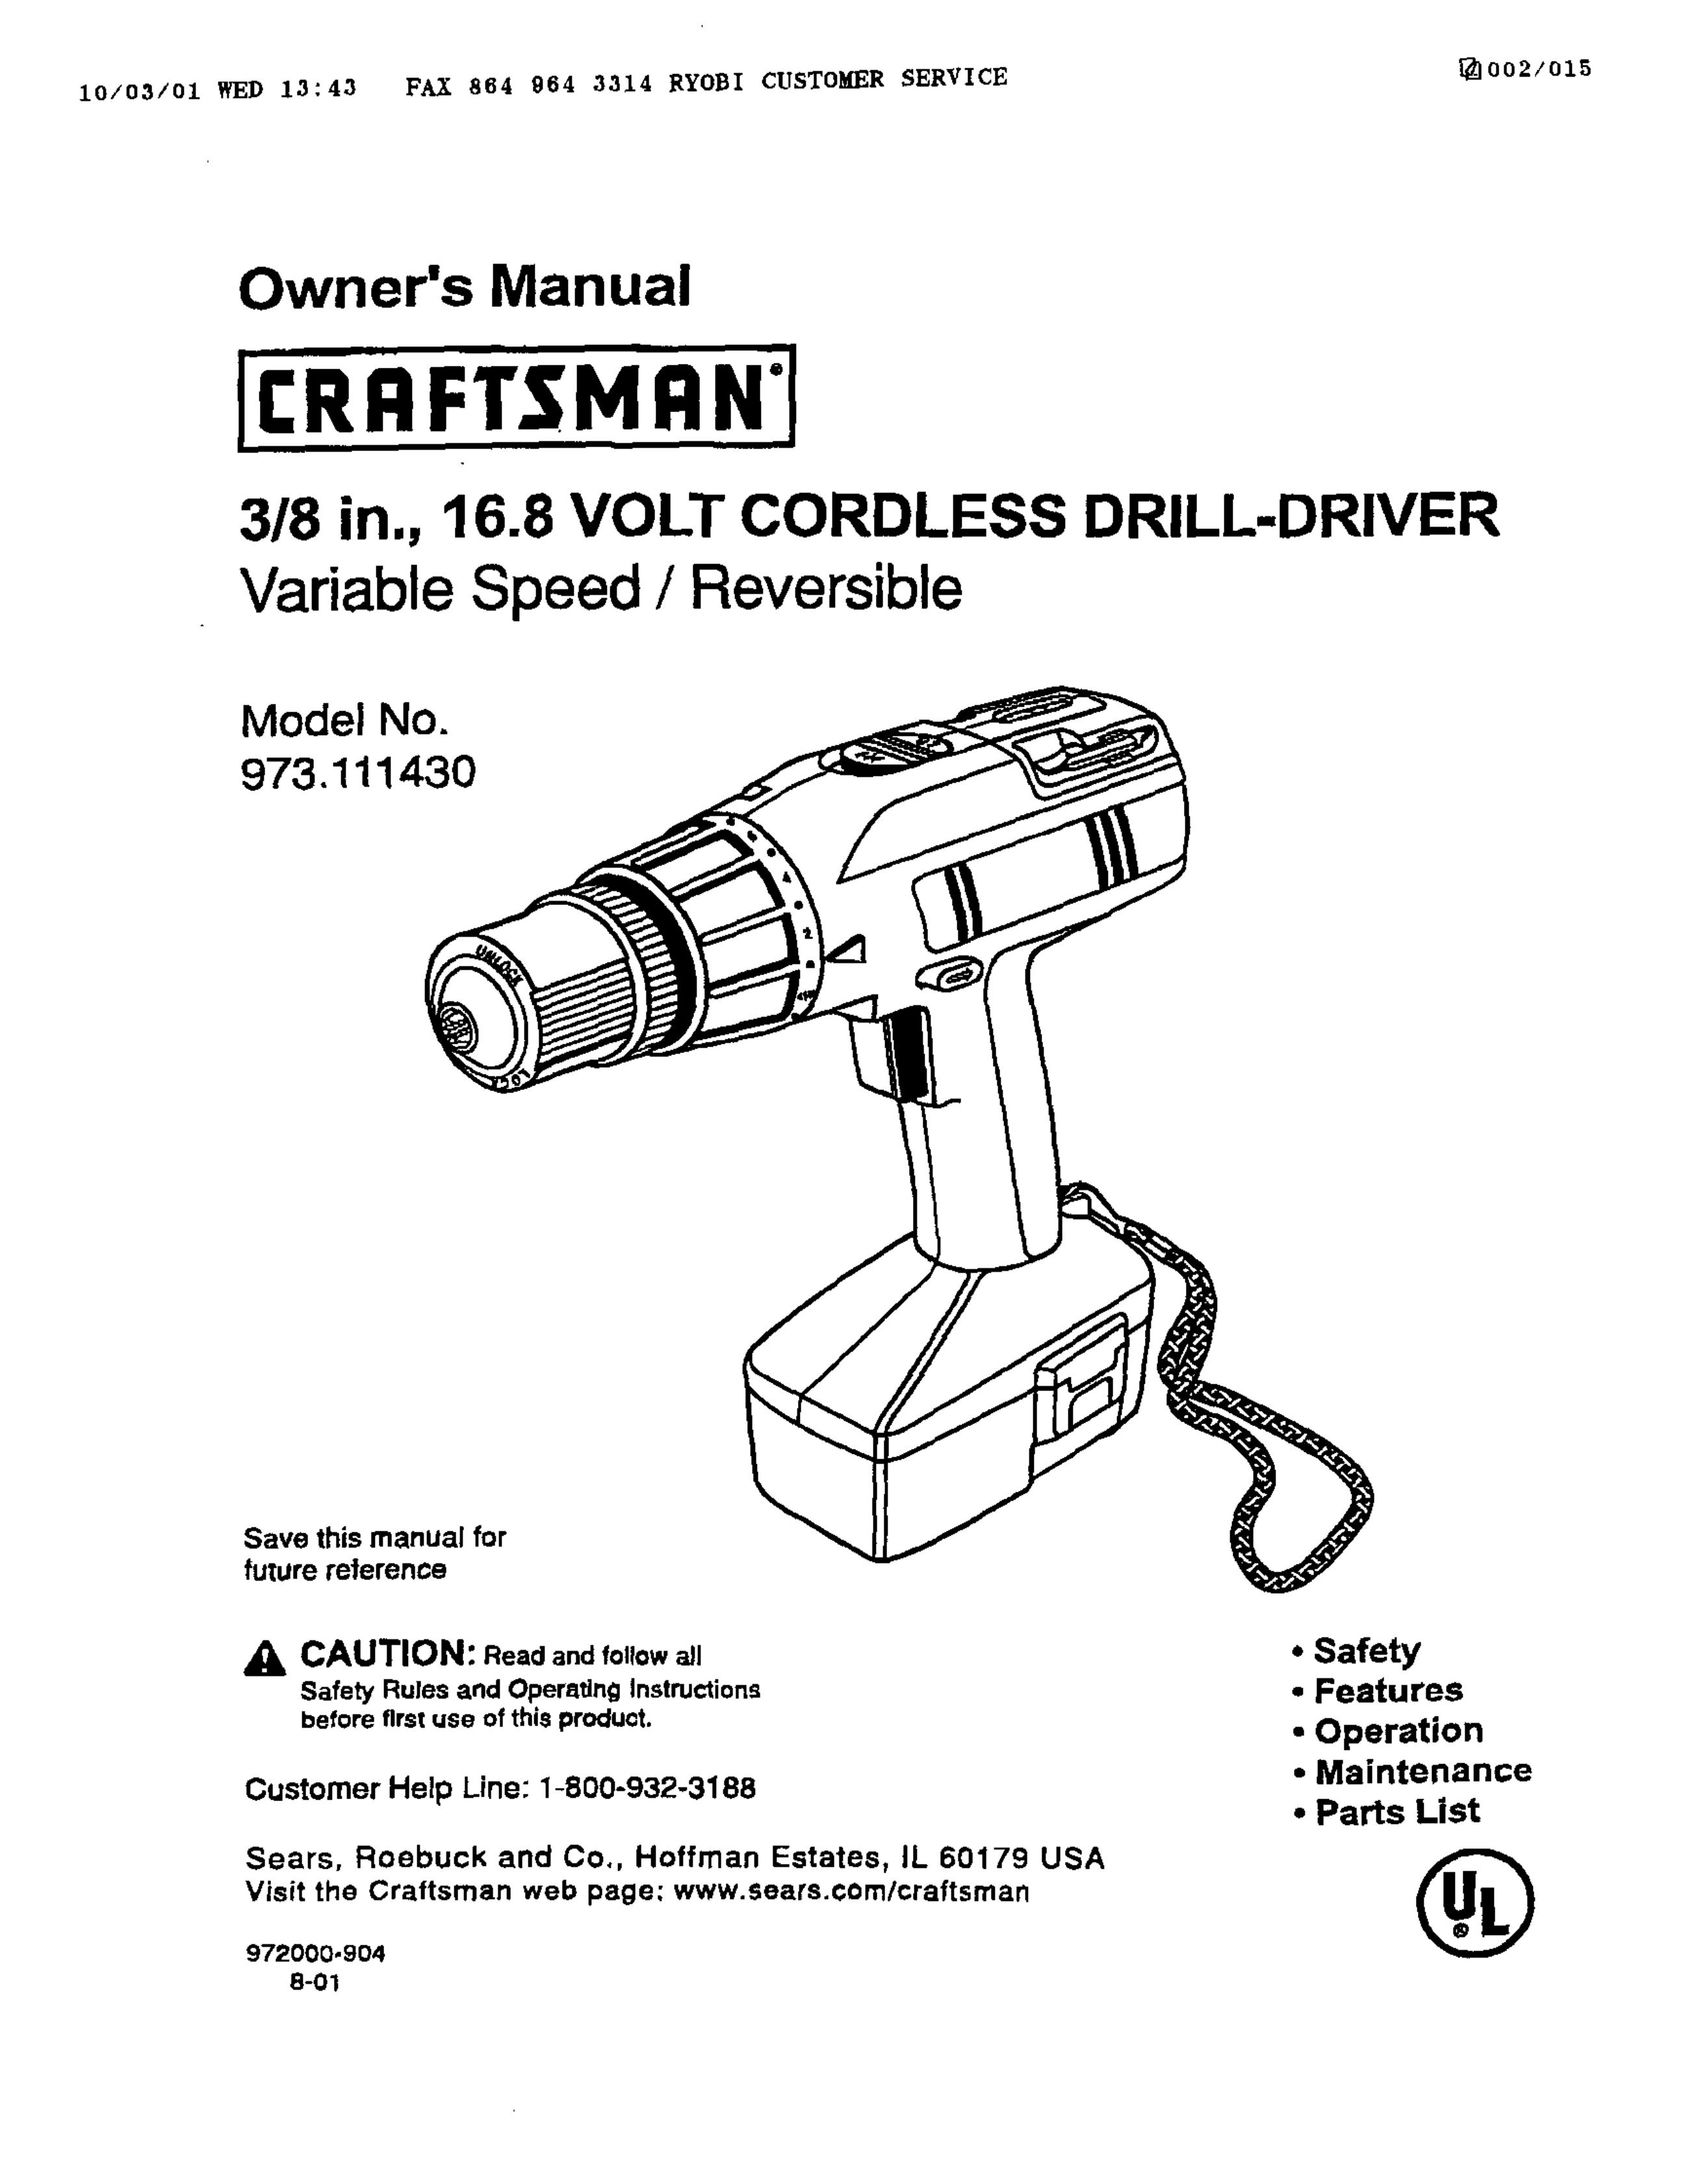 Craftsman 973.111430 Cordless Drill User Manual